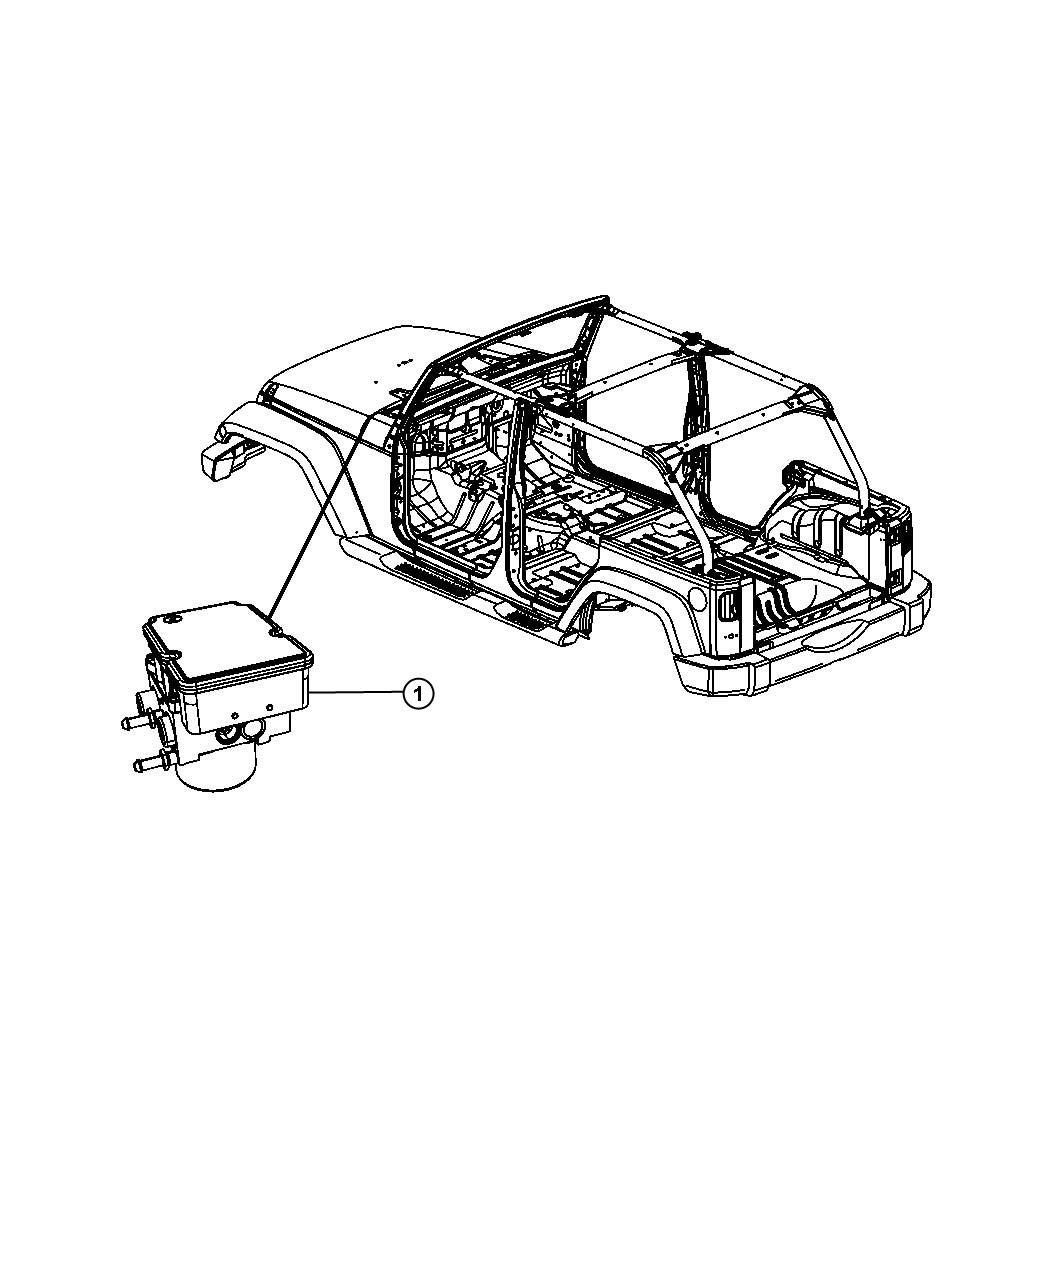 Modules, Brakes, Suspension, and Steering. Diagram